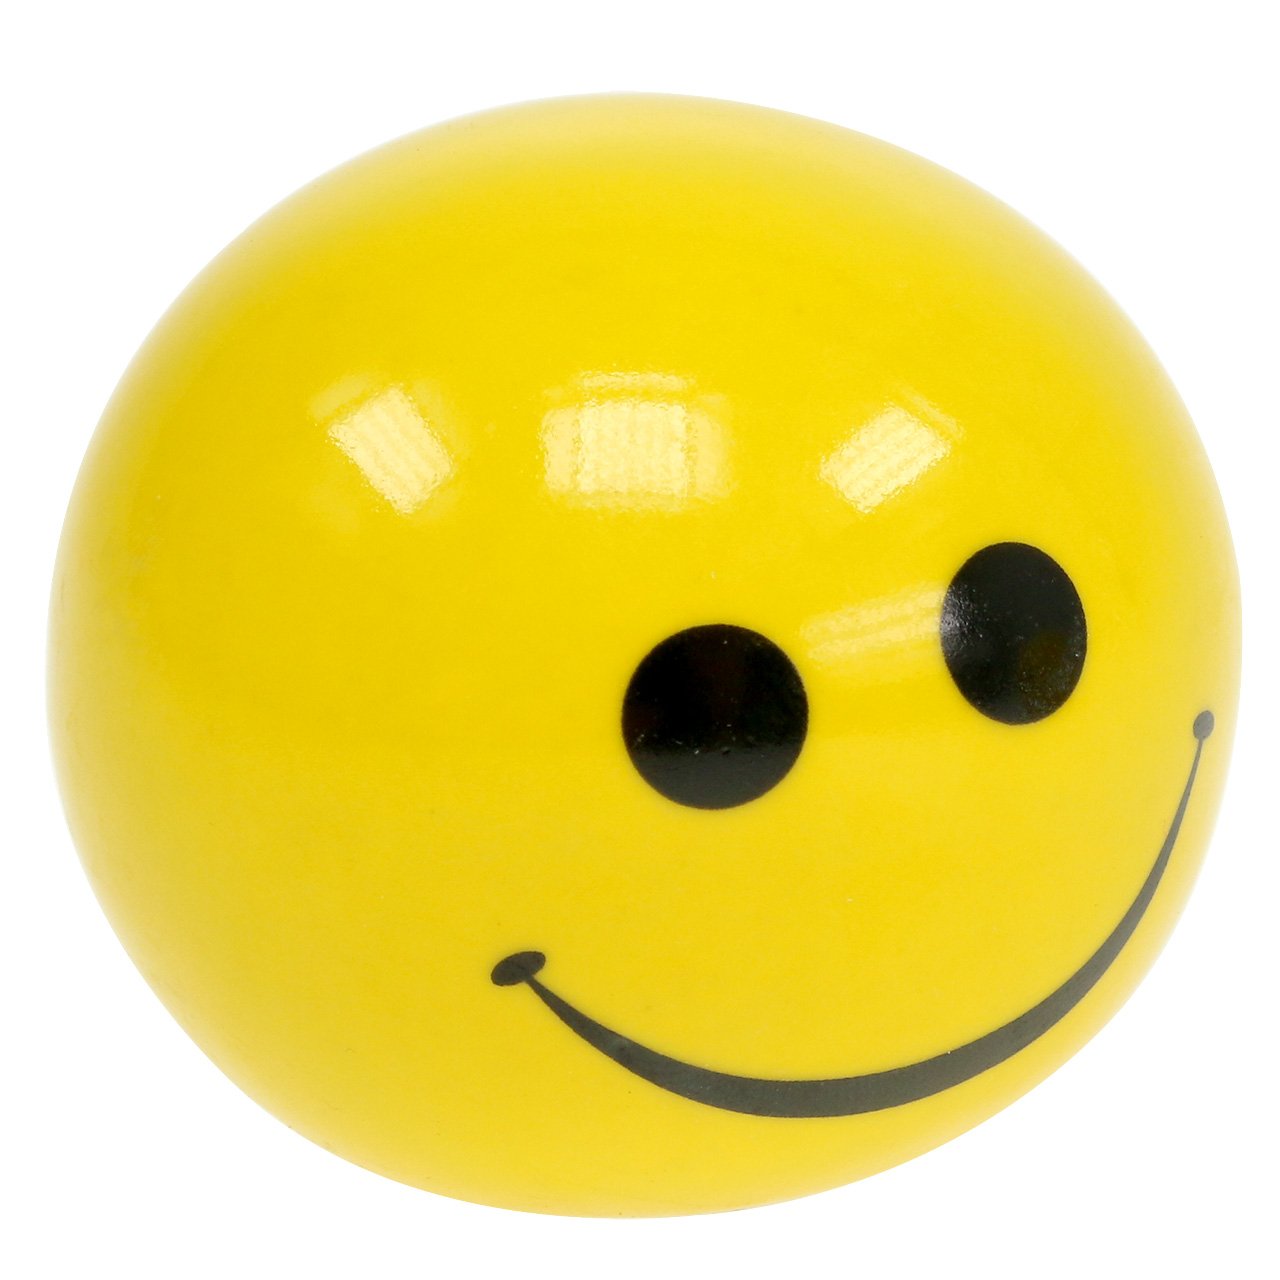 Bola de cerámica con smiley amarillo Ø5cm H4.5cm 6pcs